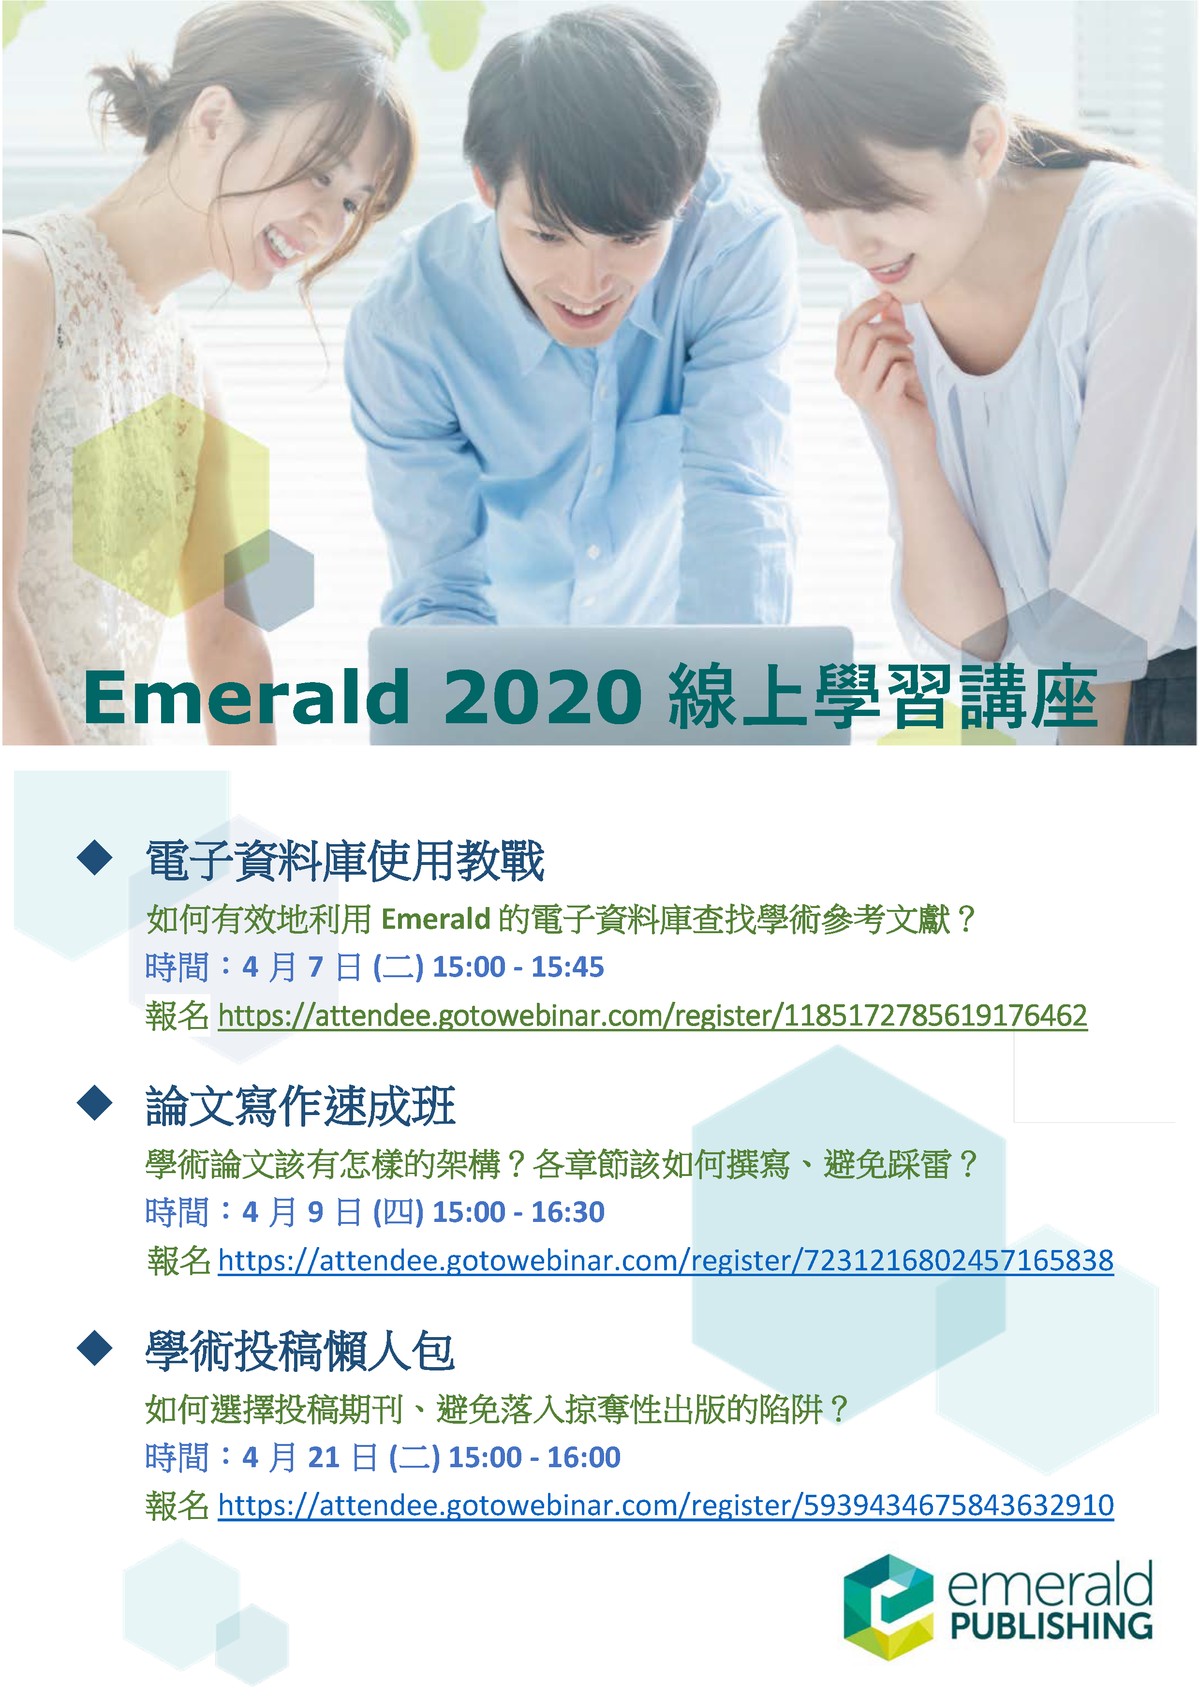 Emerald Online Training 2020